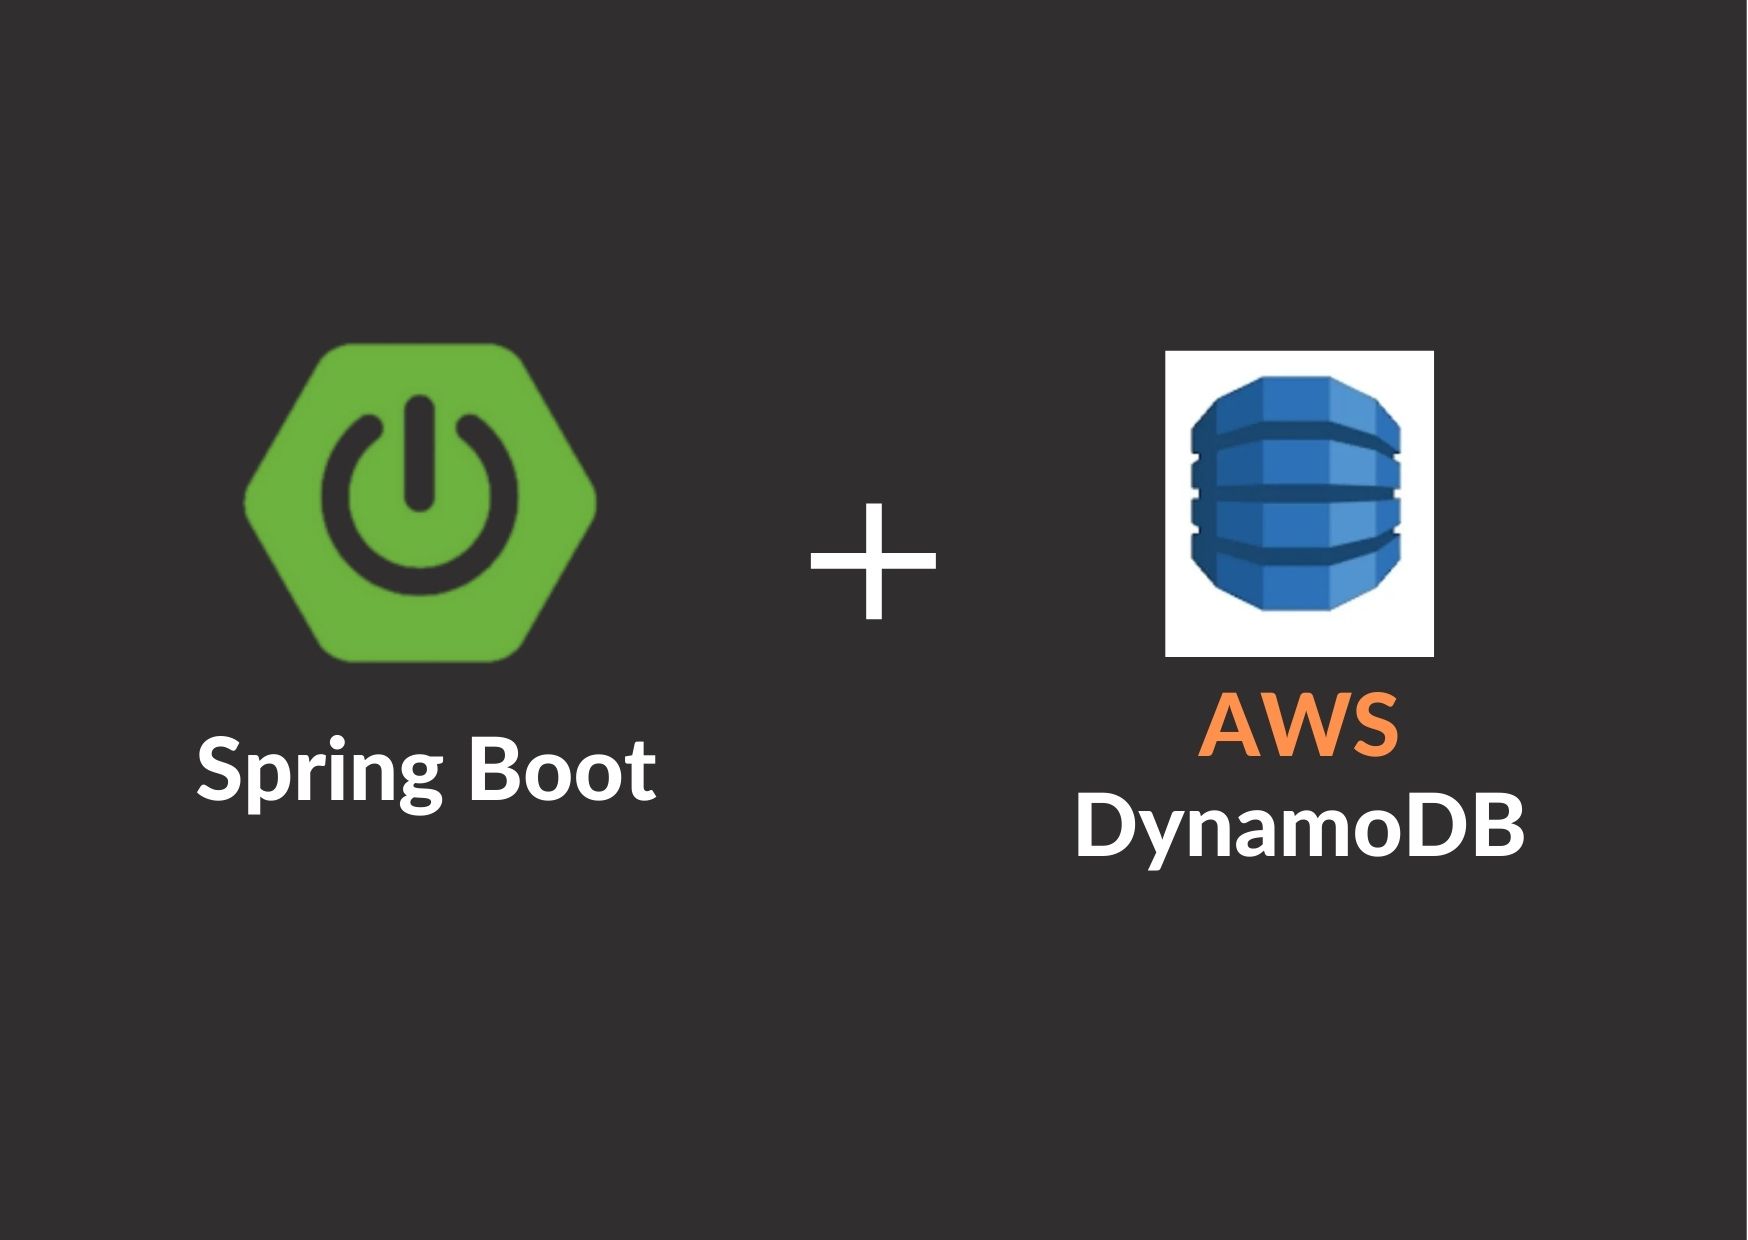 Using DynamoDB with Spring Boot